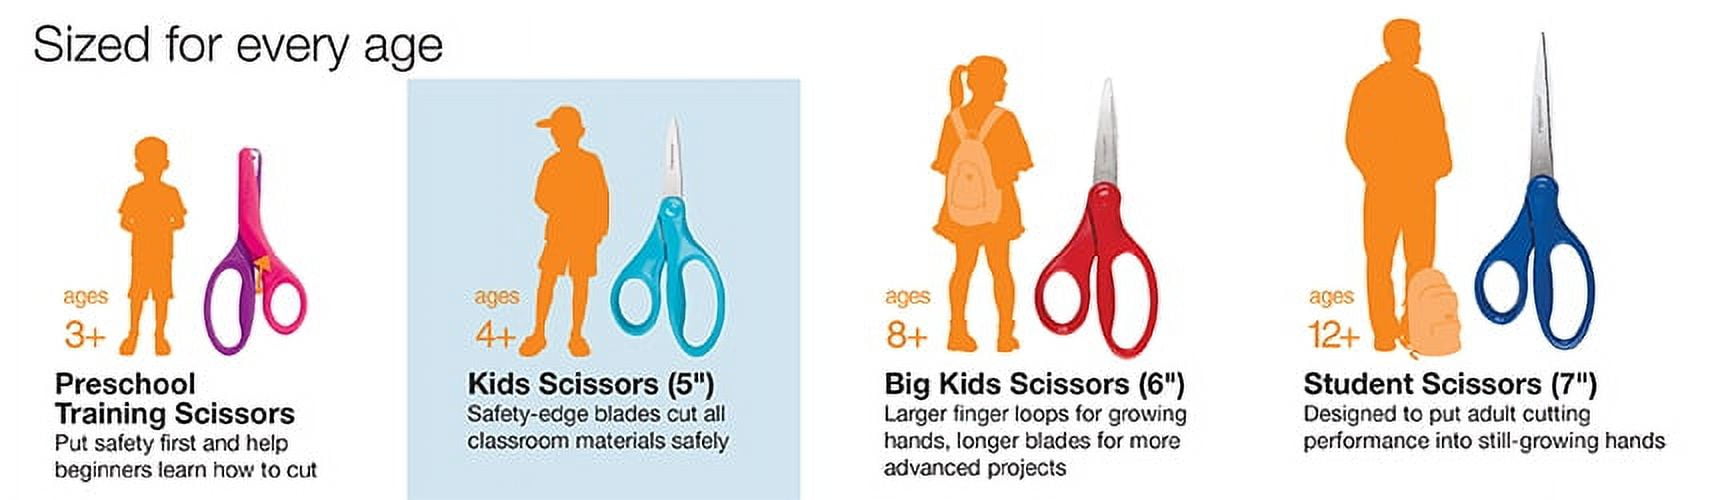 Big Kids Scissors (Ages 8+)